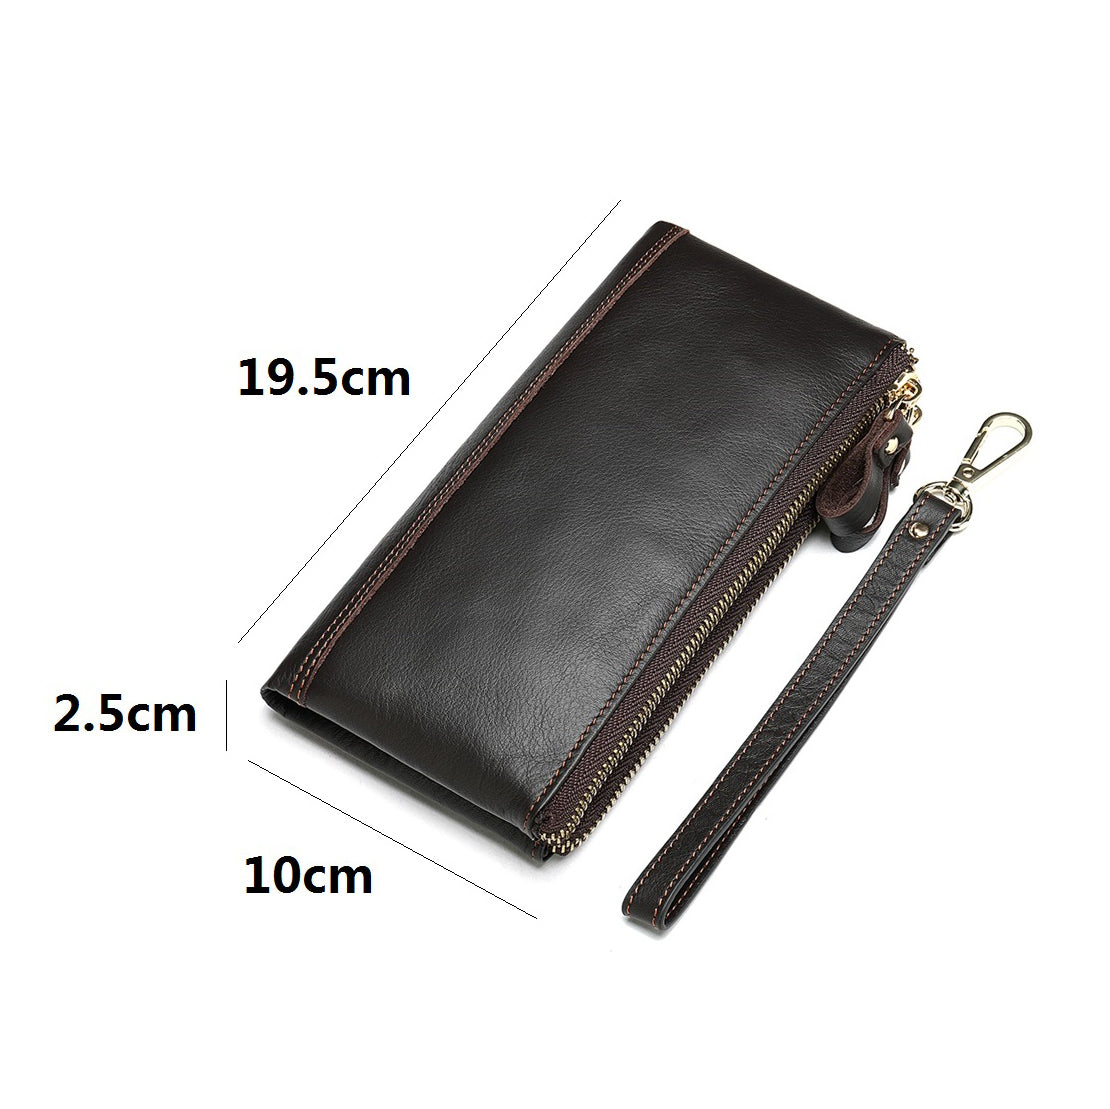 Women's and Men's unisex cowhide leather folded double zip wallet